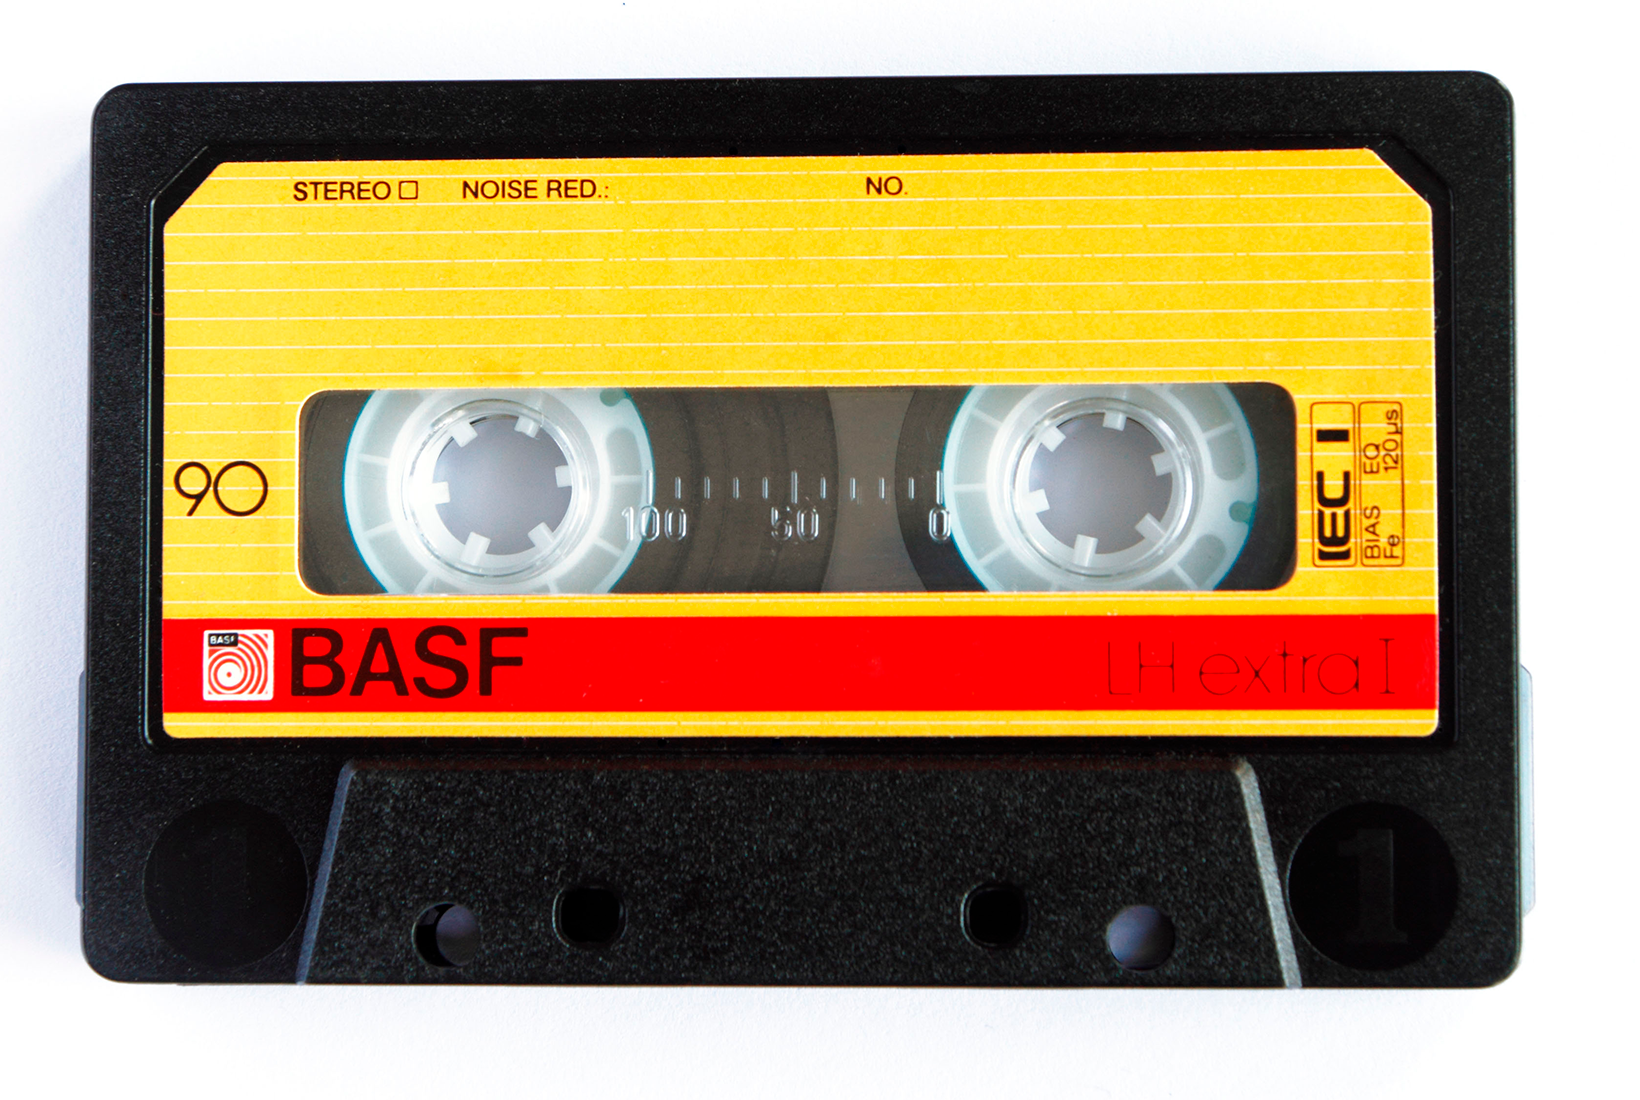 Дом кассета. Audio Cassette BASF. Compact Cassette BASF. O Zone кассета. BASF кассеты hng.